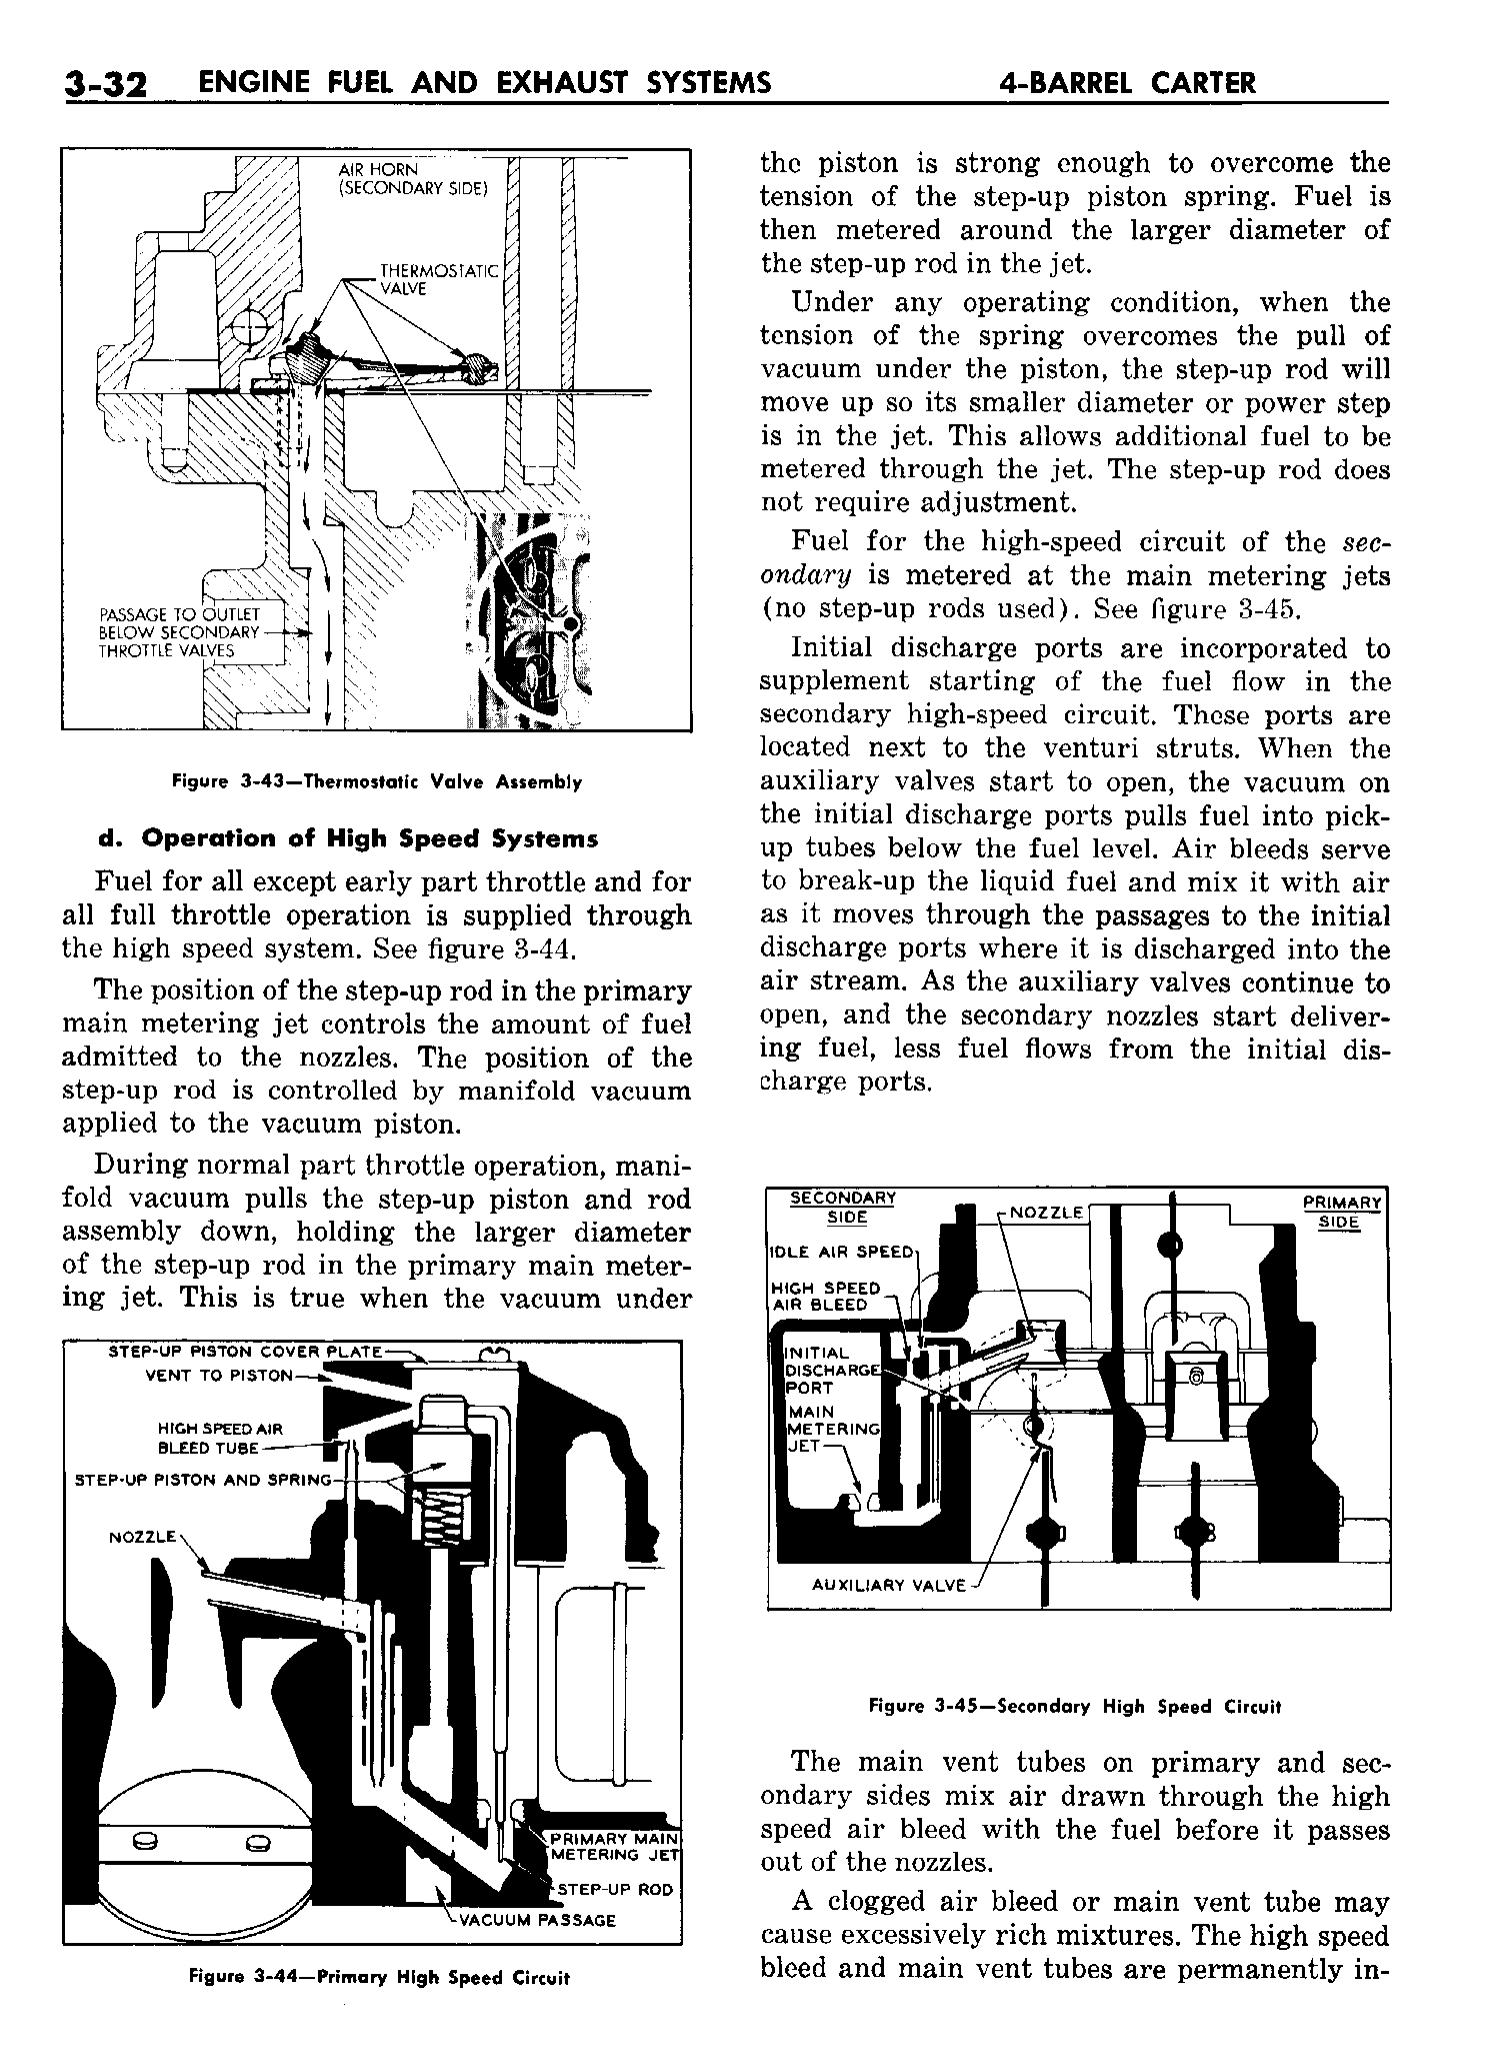 n_04 1958 Buick Shop Manual - Engine Fuel & Exhaust_32.jpg